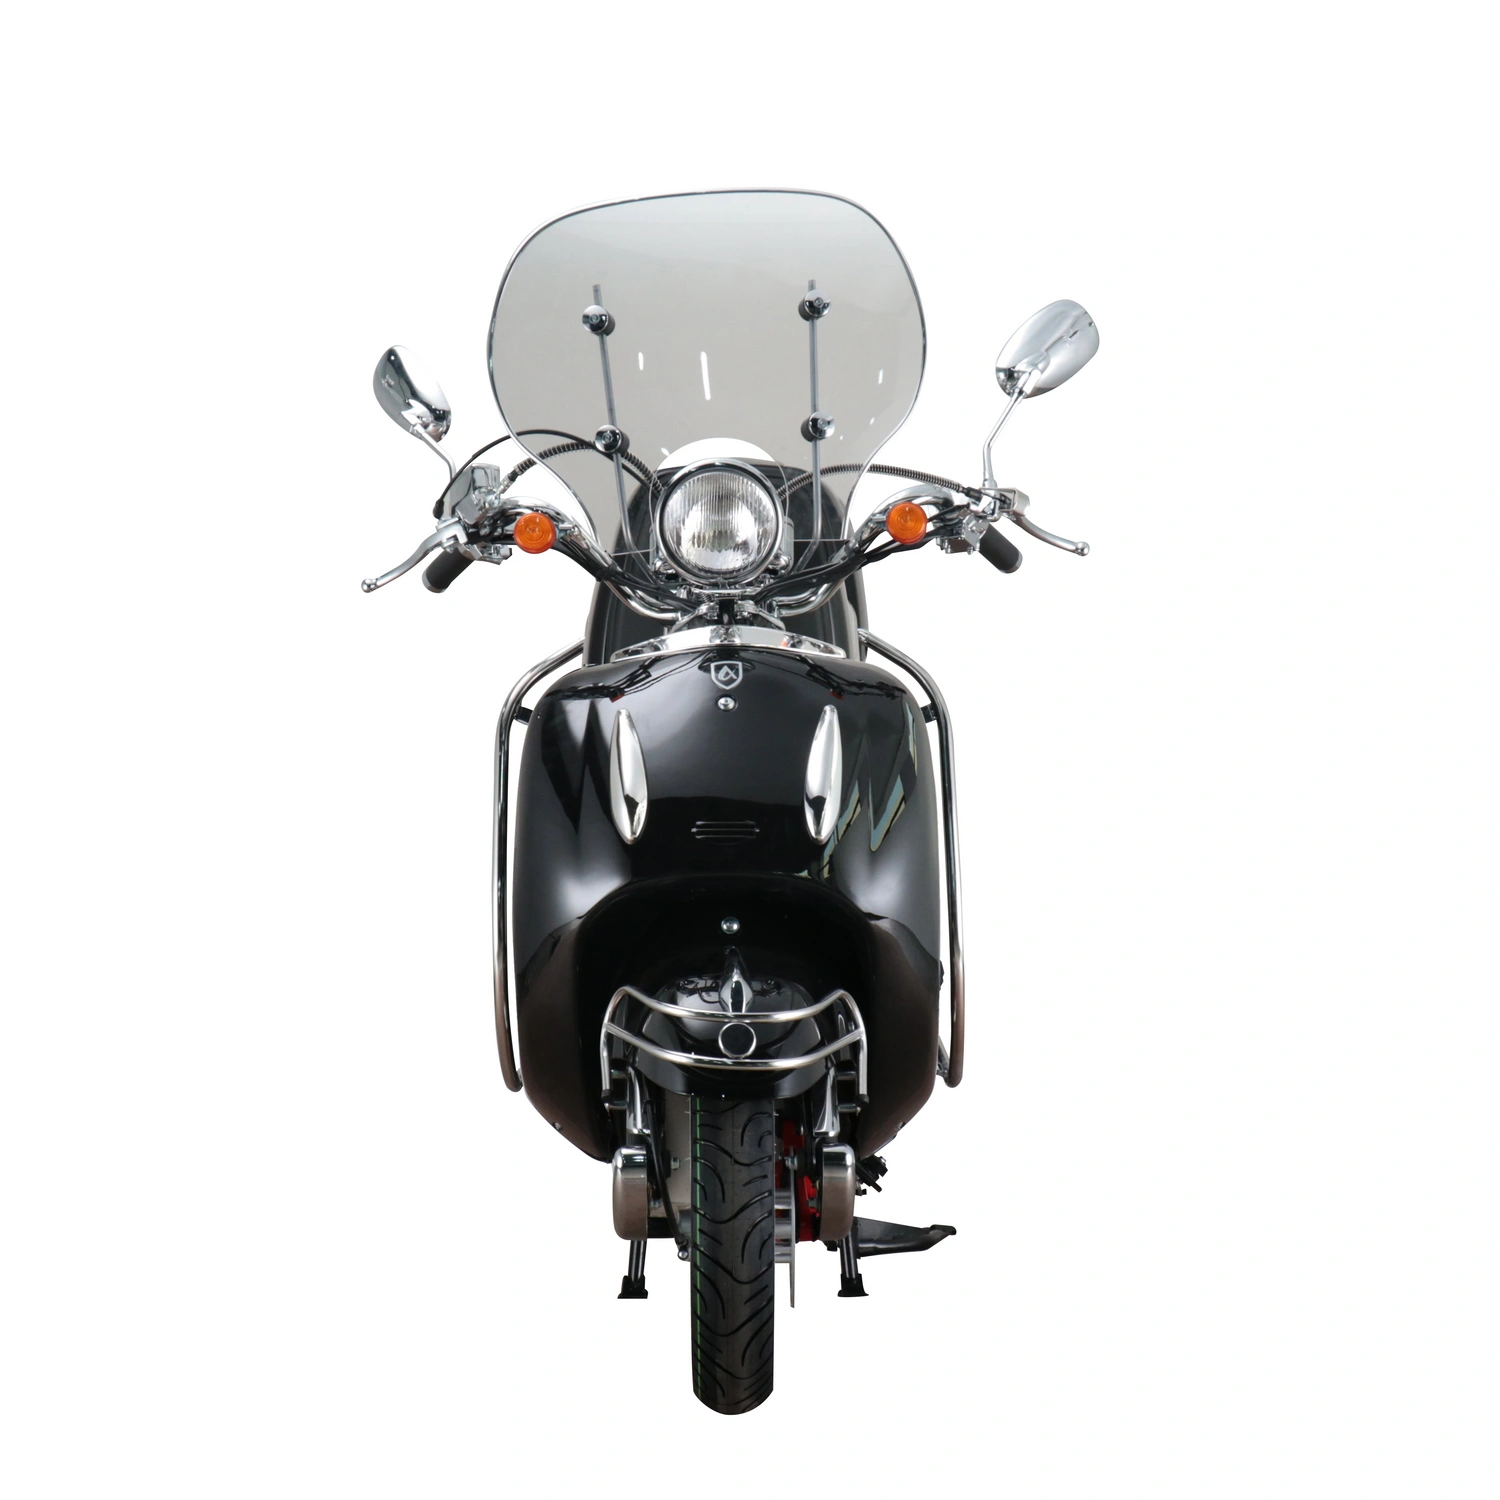 l/100 cm³, 3,0 Verbrauch: Motorroller »Retro Firenze«, ALPHA MOTORS km ca. 125